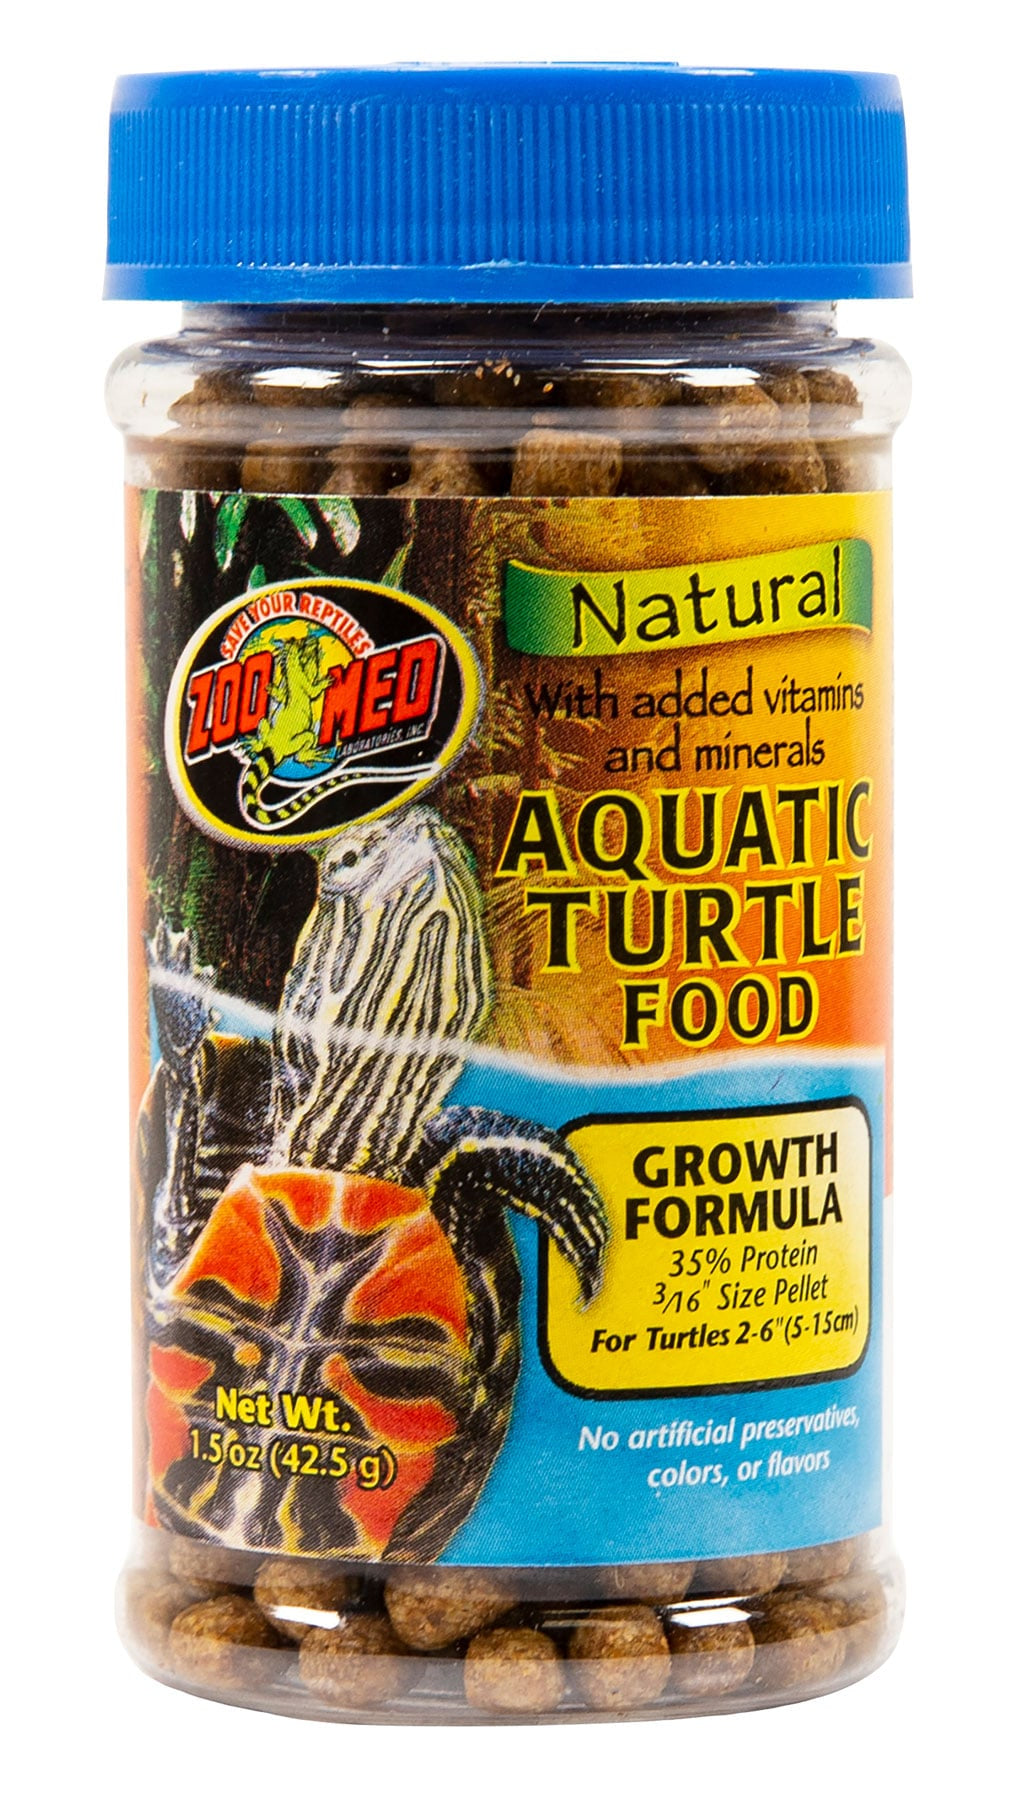 Zoo Med Natural Aquatic Turtle Food Growth Formula - PetMountain.com